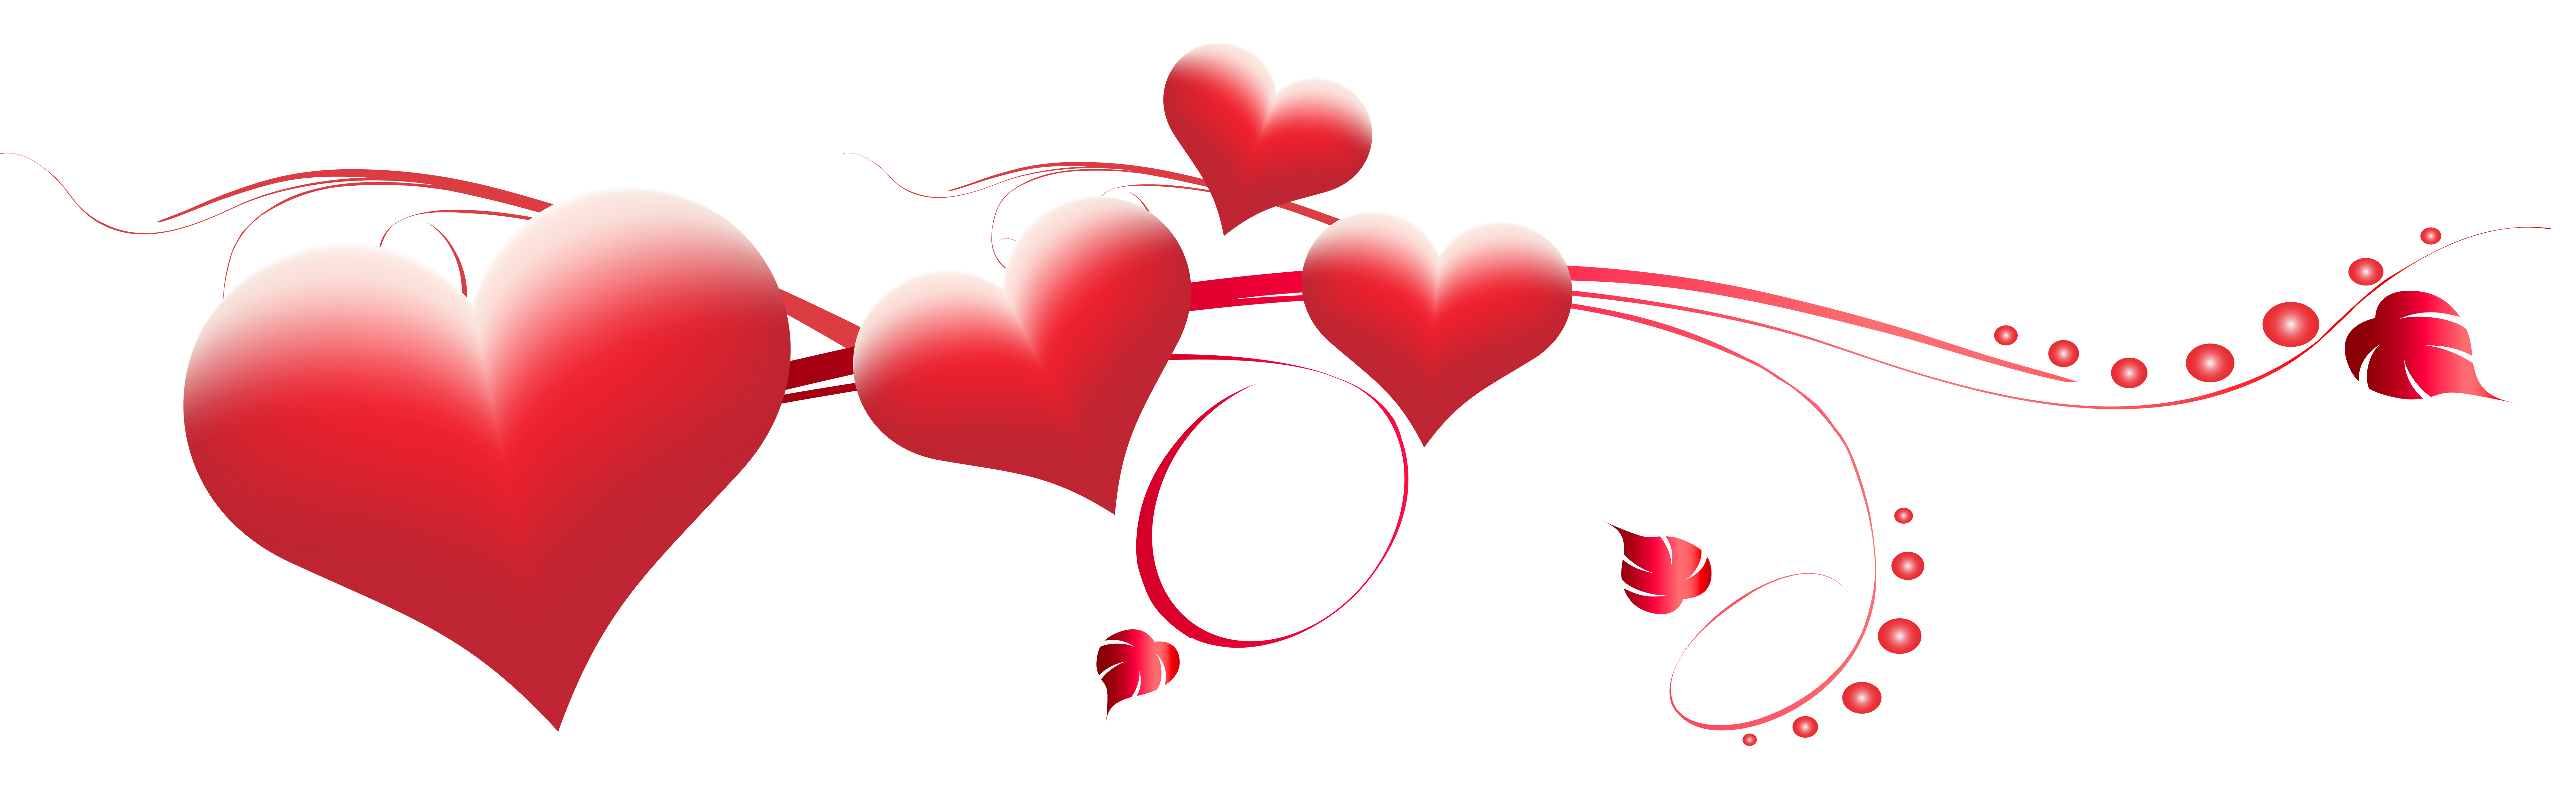 Clipart banner valentines. Valentine s day hearts